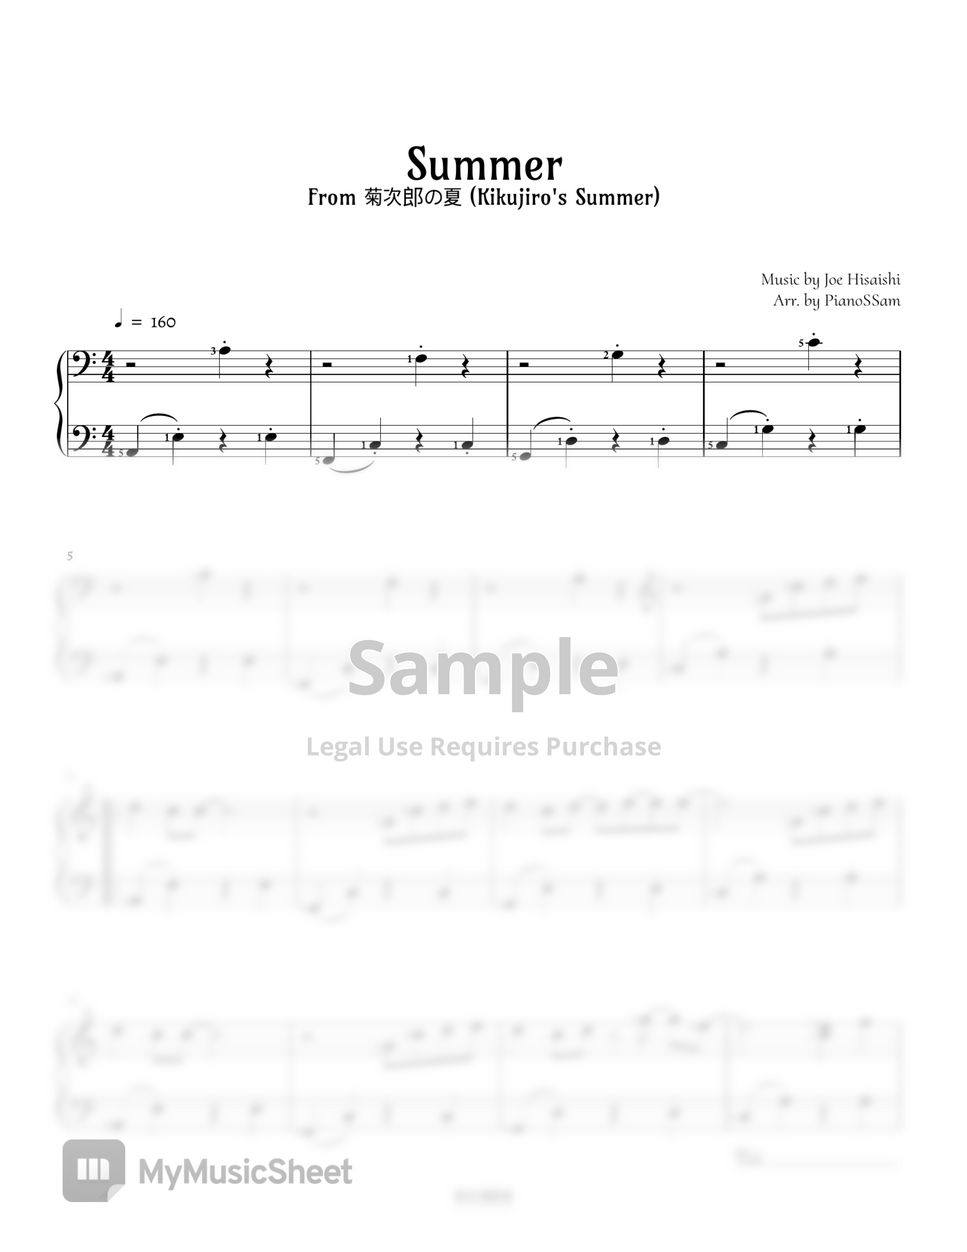 Joe Hisaishi - Summer from 菊次郎の夏(Kikujiro's summer) | Piano Arrangement in C major (기쿠지로의 여름) by PianoSSam